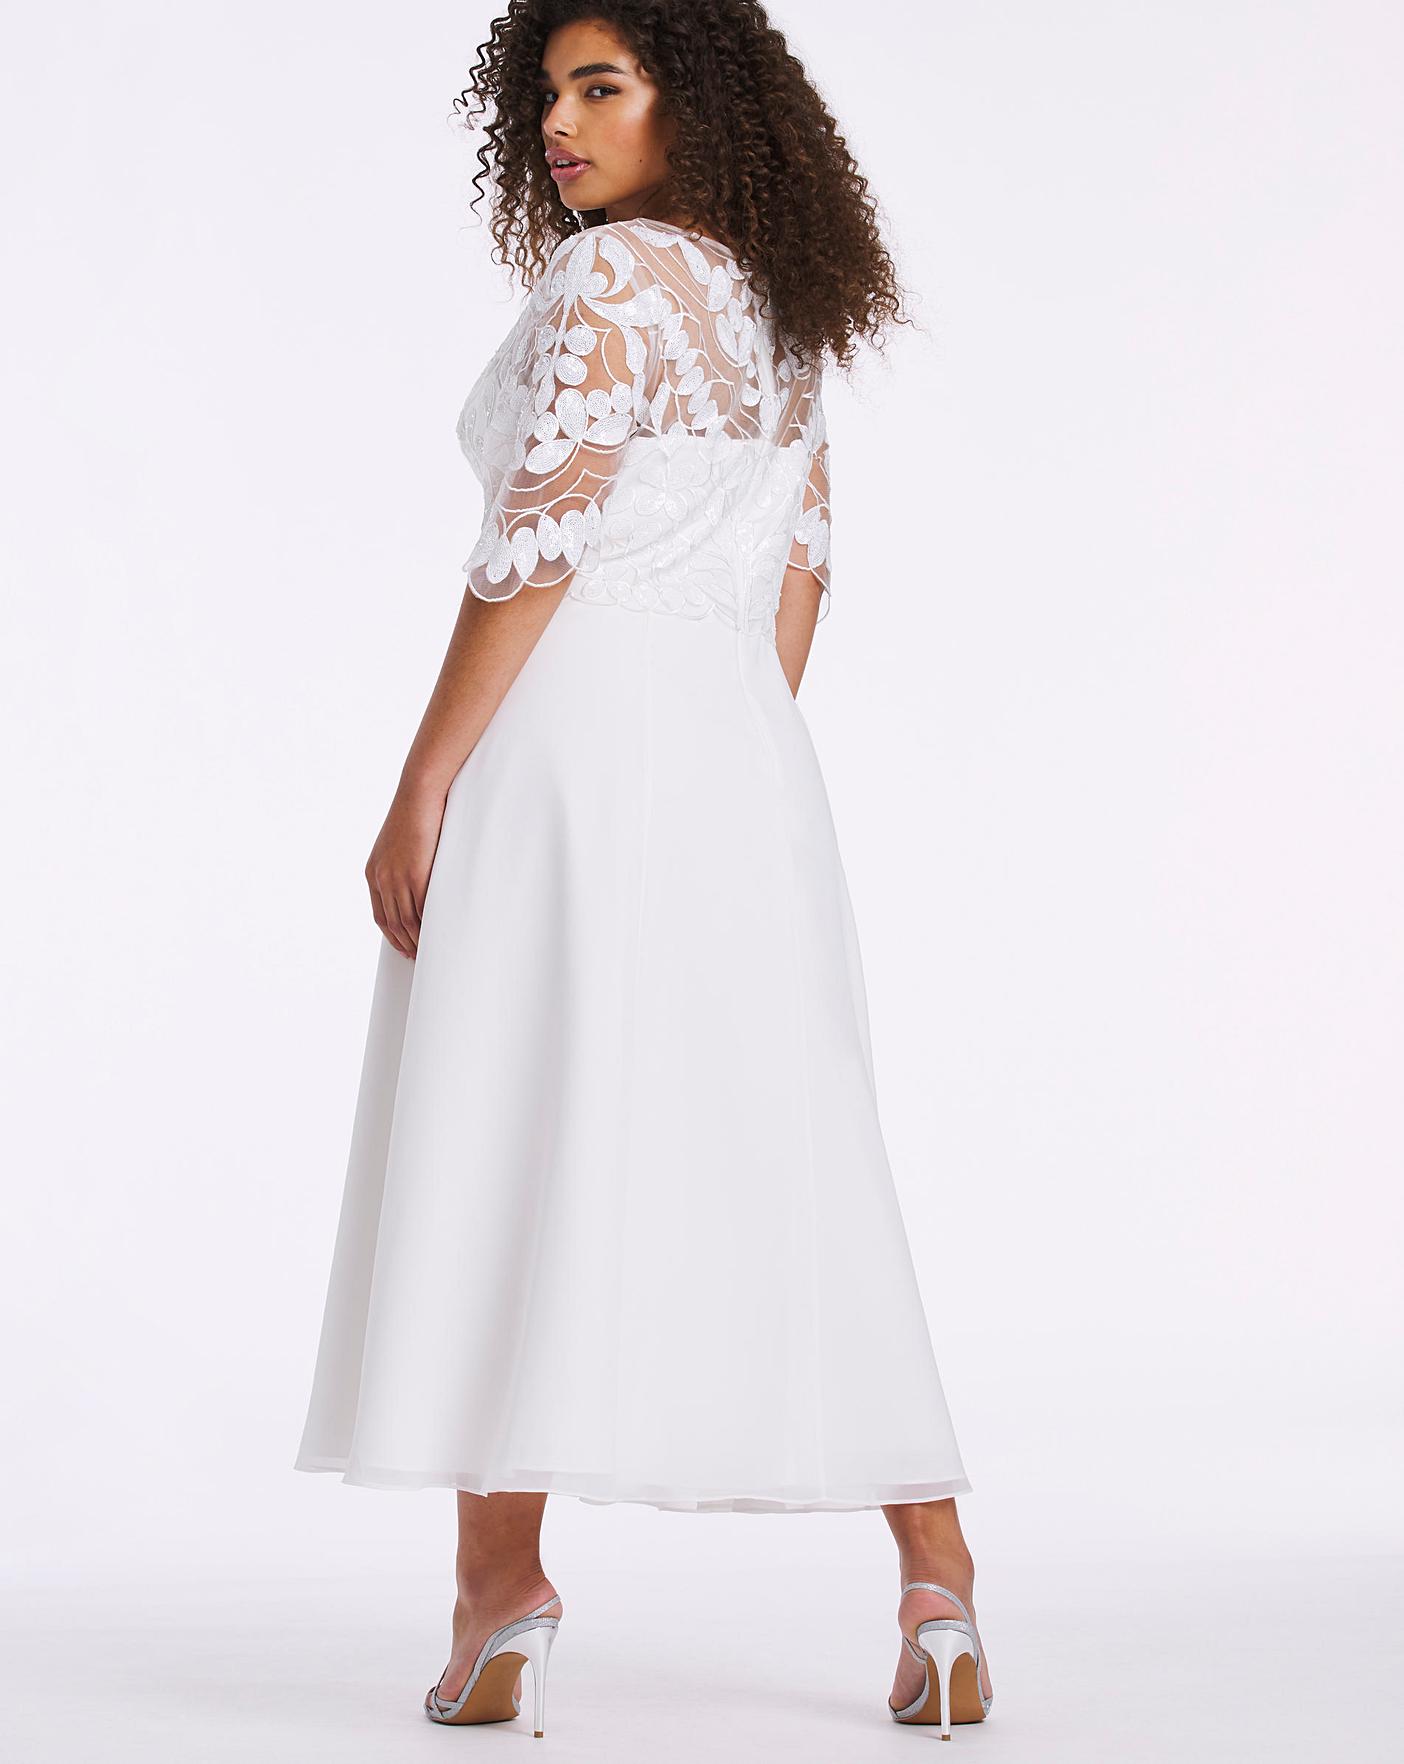 Joanna Hope Bridal Midi Dress | Fashion World